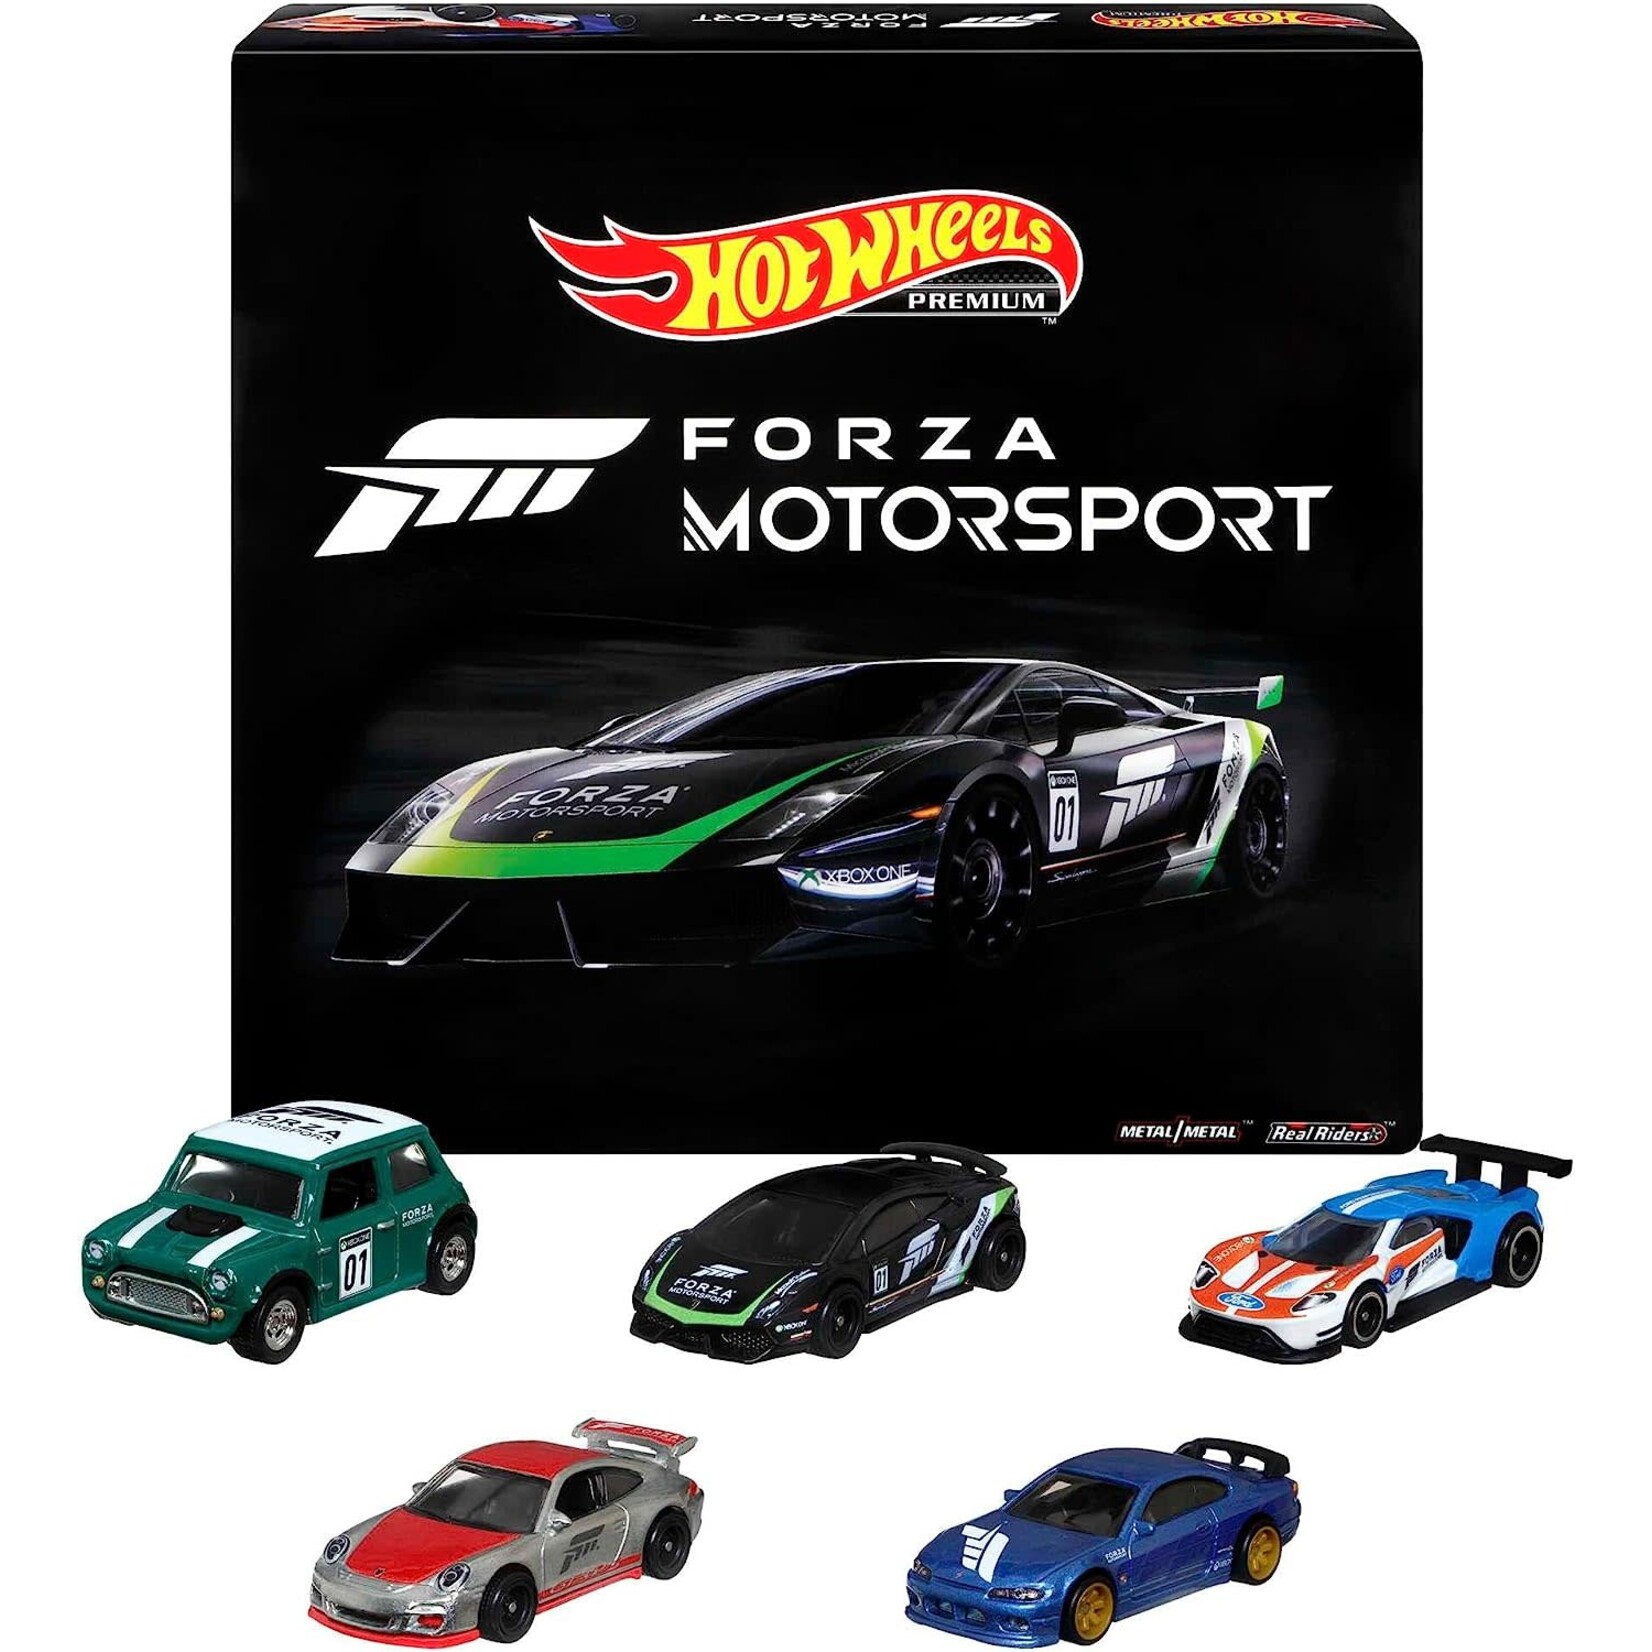 Mattel MTTHFF49 Mattel Hot Wheels Forza Premium 5 Pack